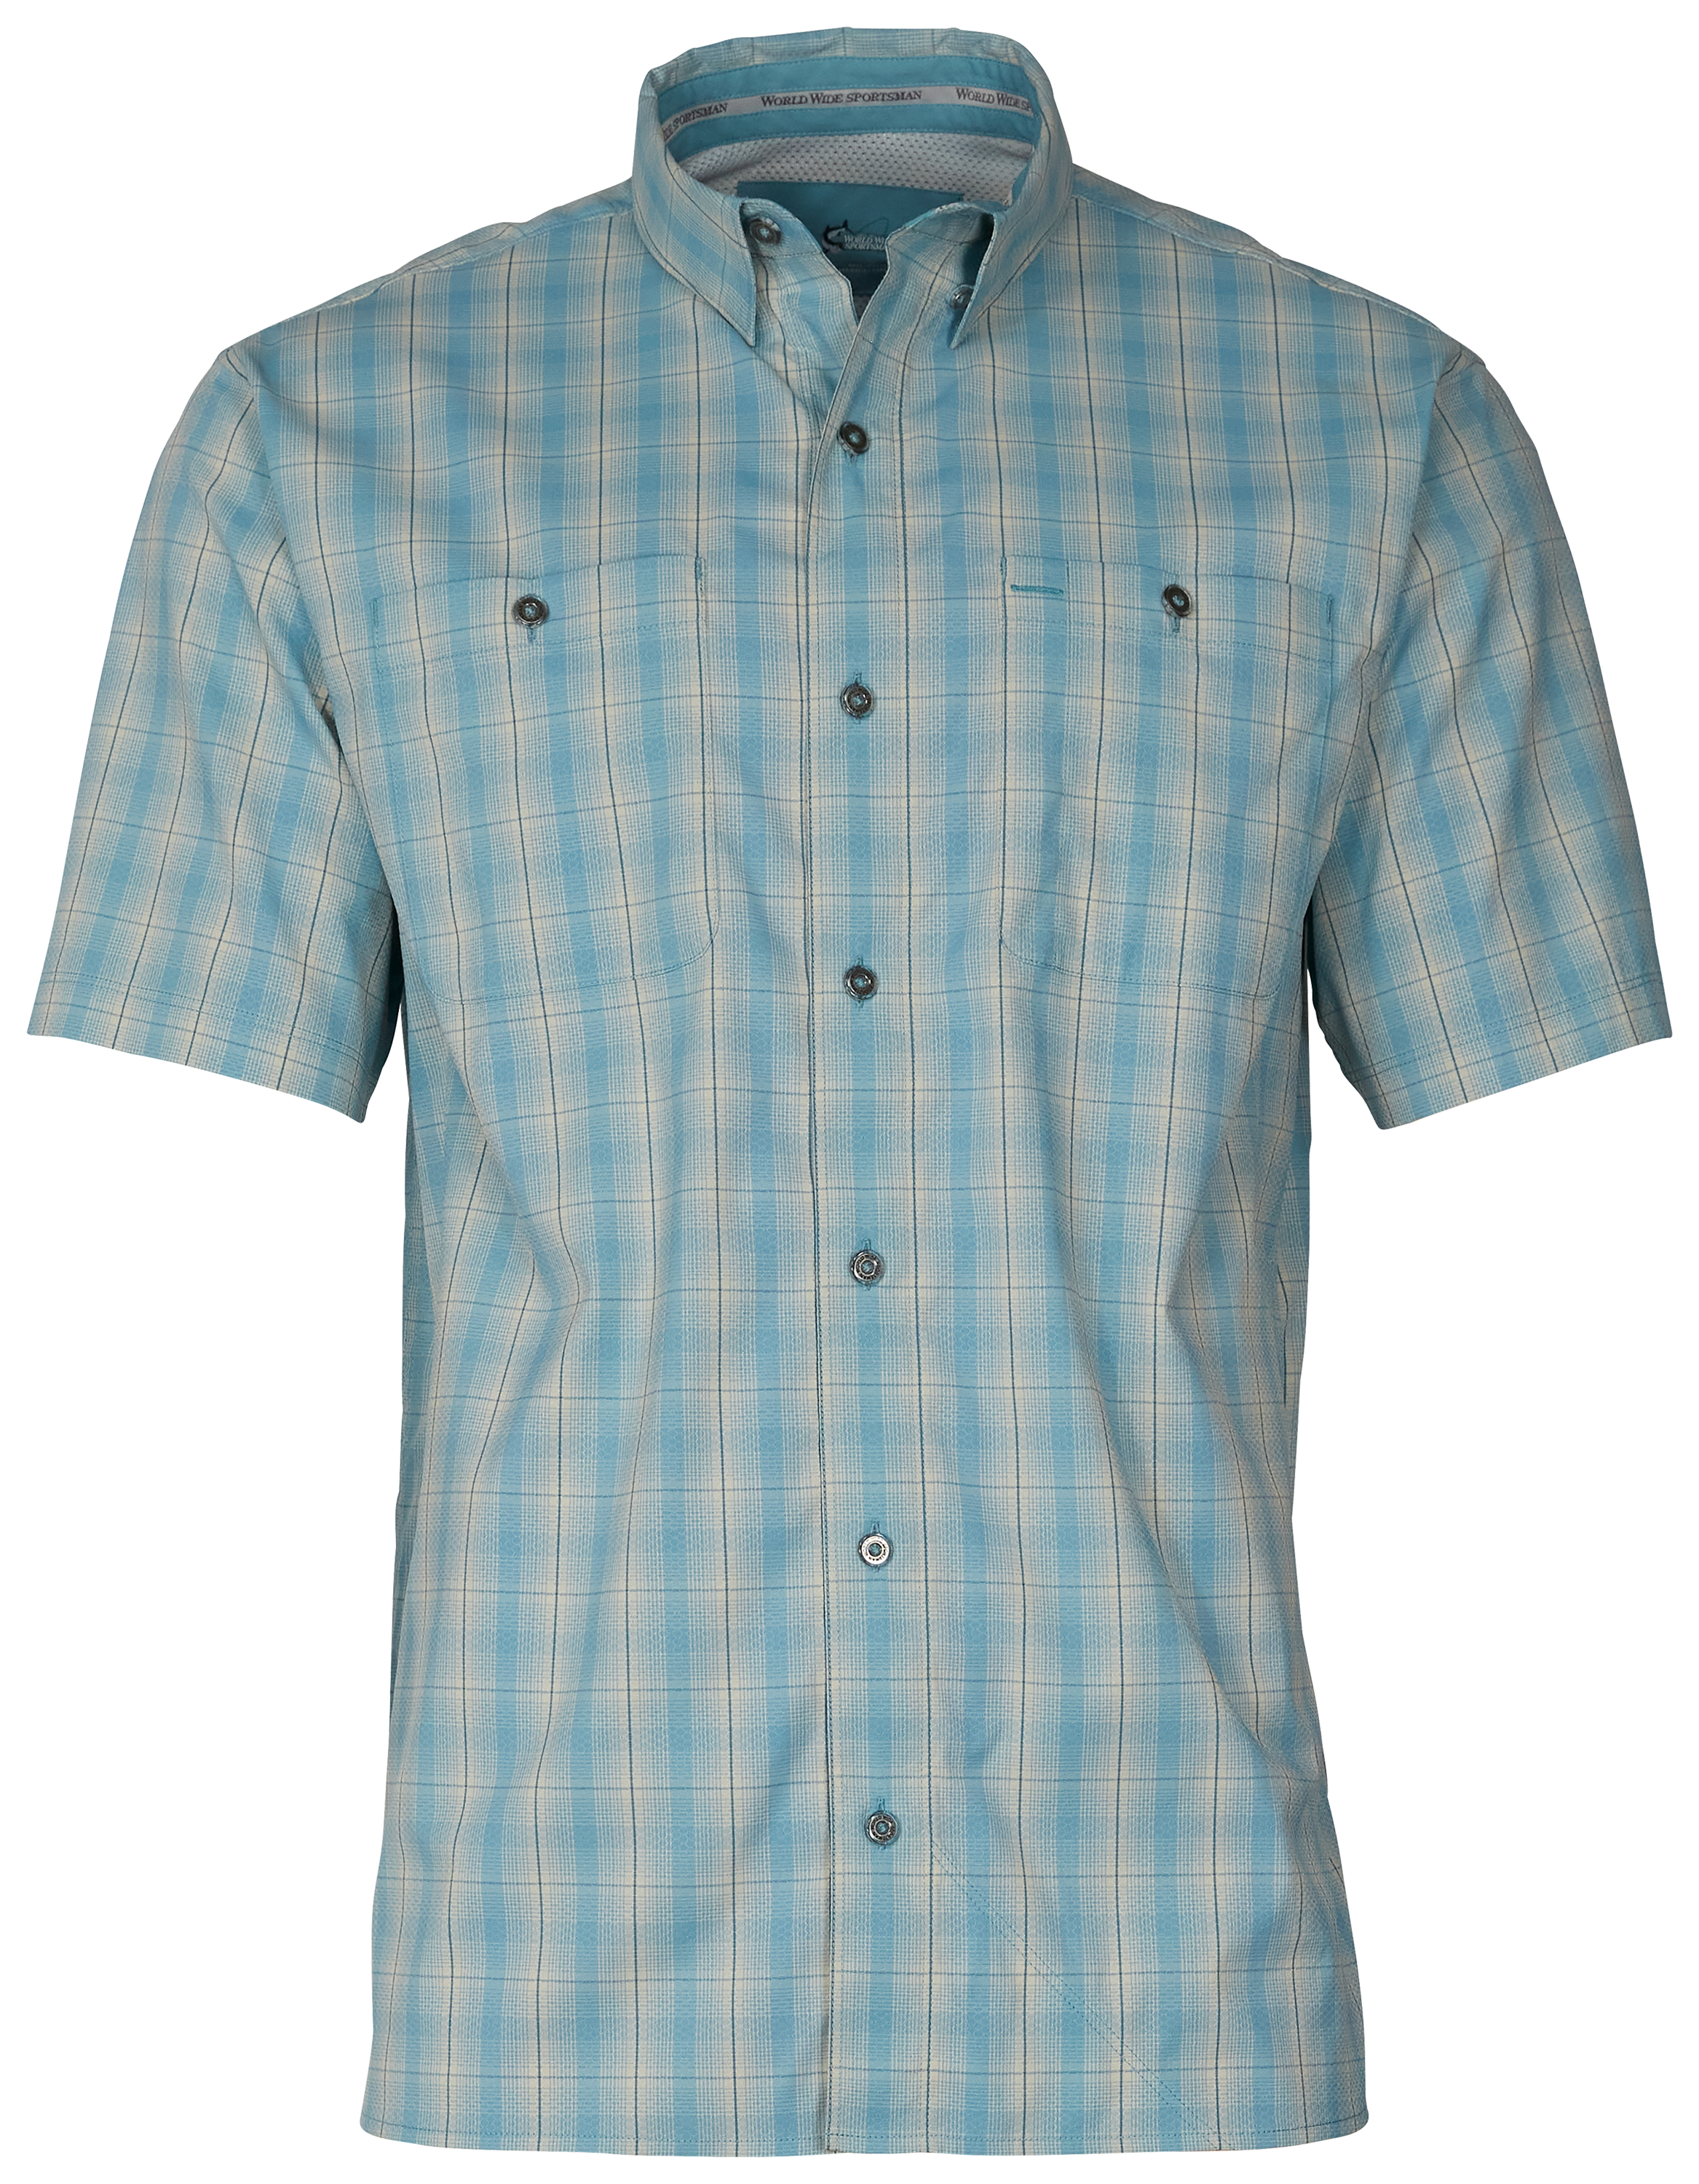 World Wide Sportsman Ultimate Angler Plaid Short-Sleeve Shirt for Men - Fading Ripple Plaid - 3XL